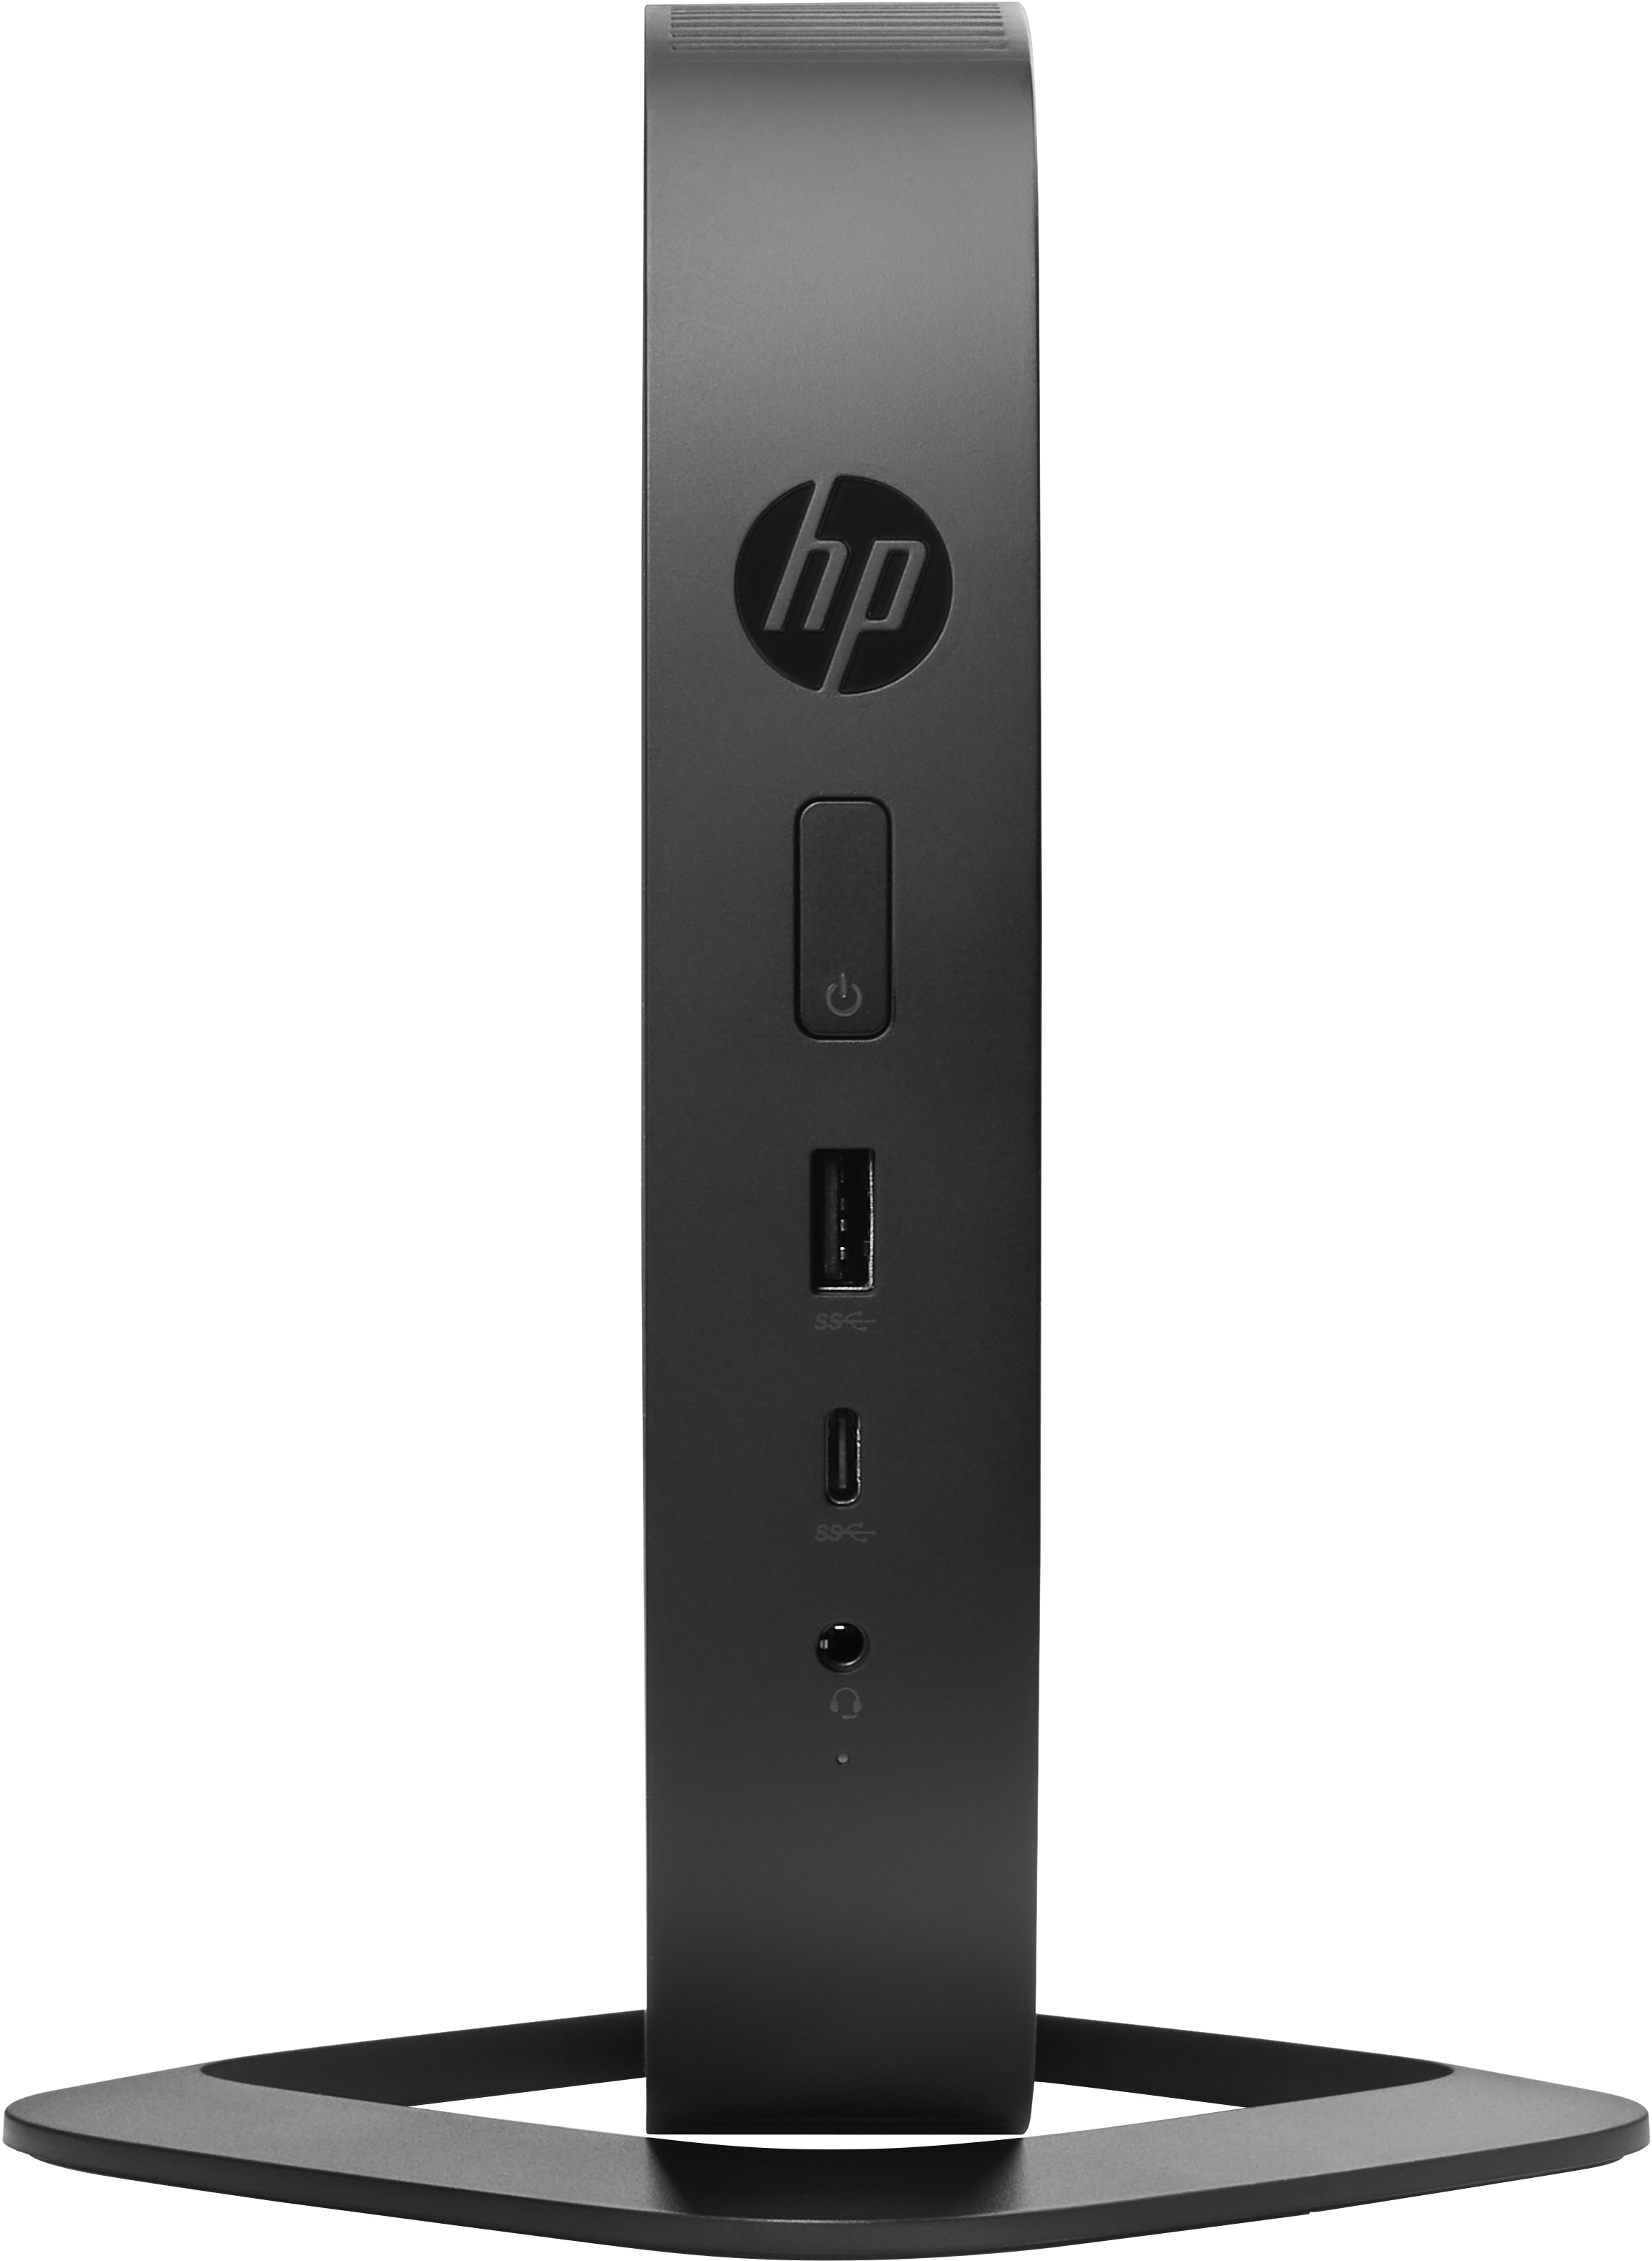 HP t530 - Thin client - tower - 1 x GX-215JJ 1.5 GHz - RAM 4 GB - flash 32 GB - MLC - Radeon R2E - GigE - Win 10 IOT Enterprise 64-bit - monitor: none - keyboard: US